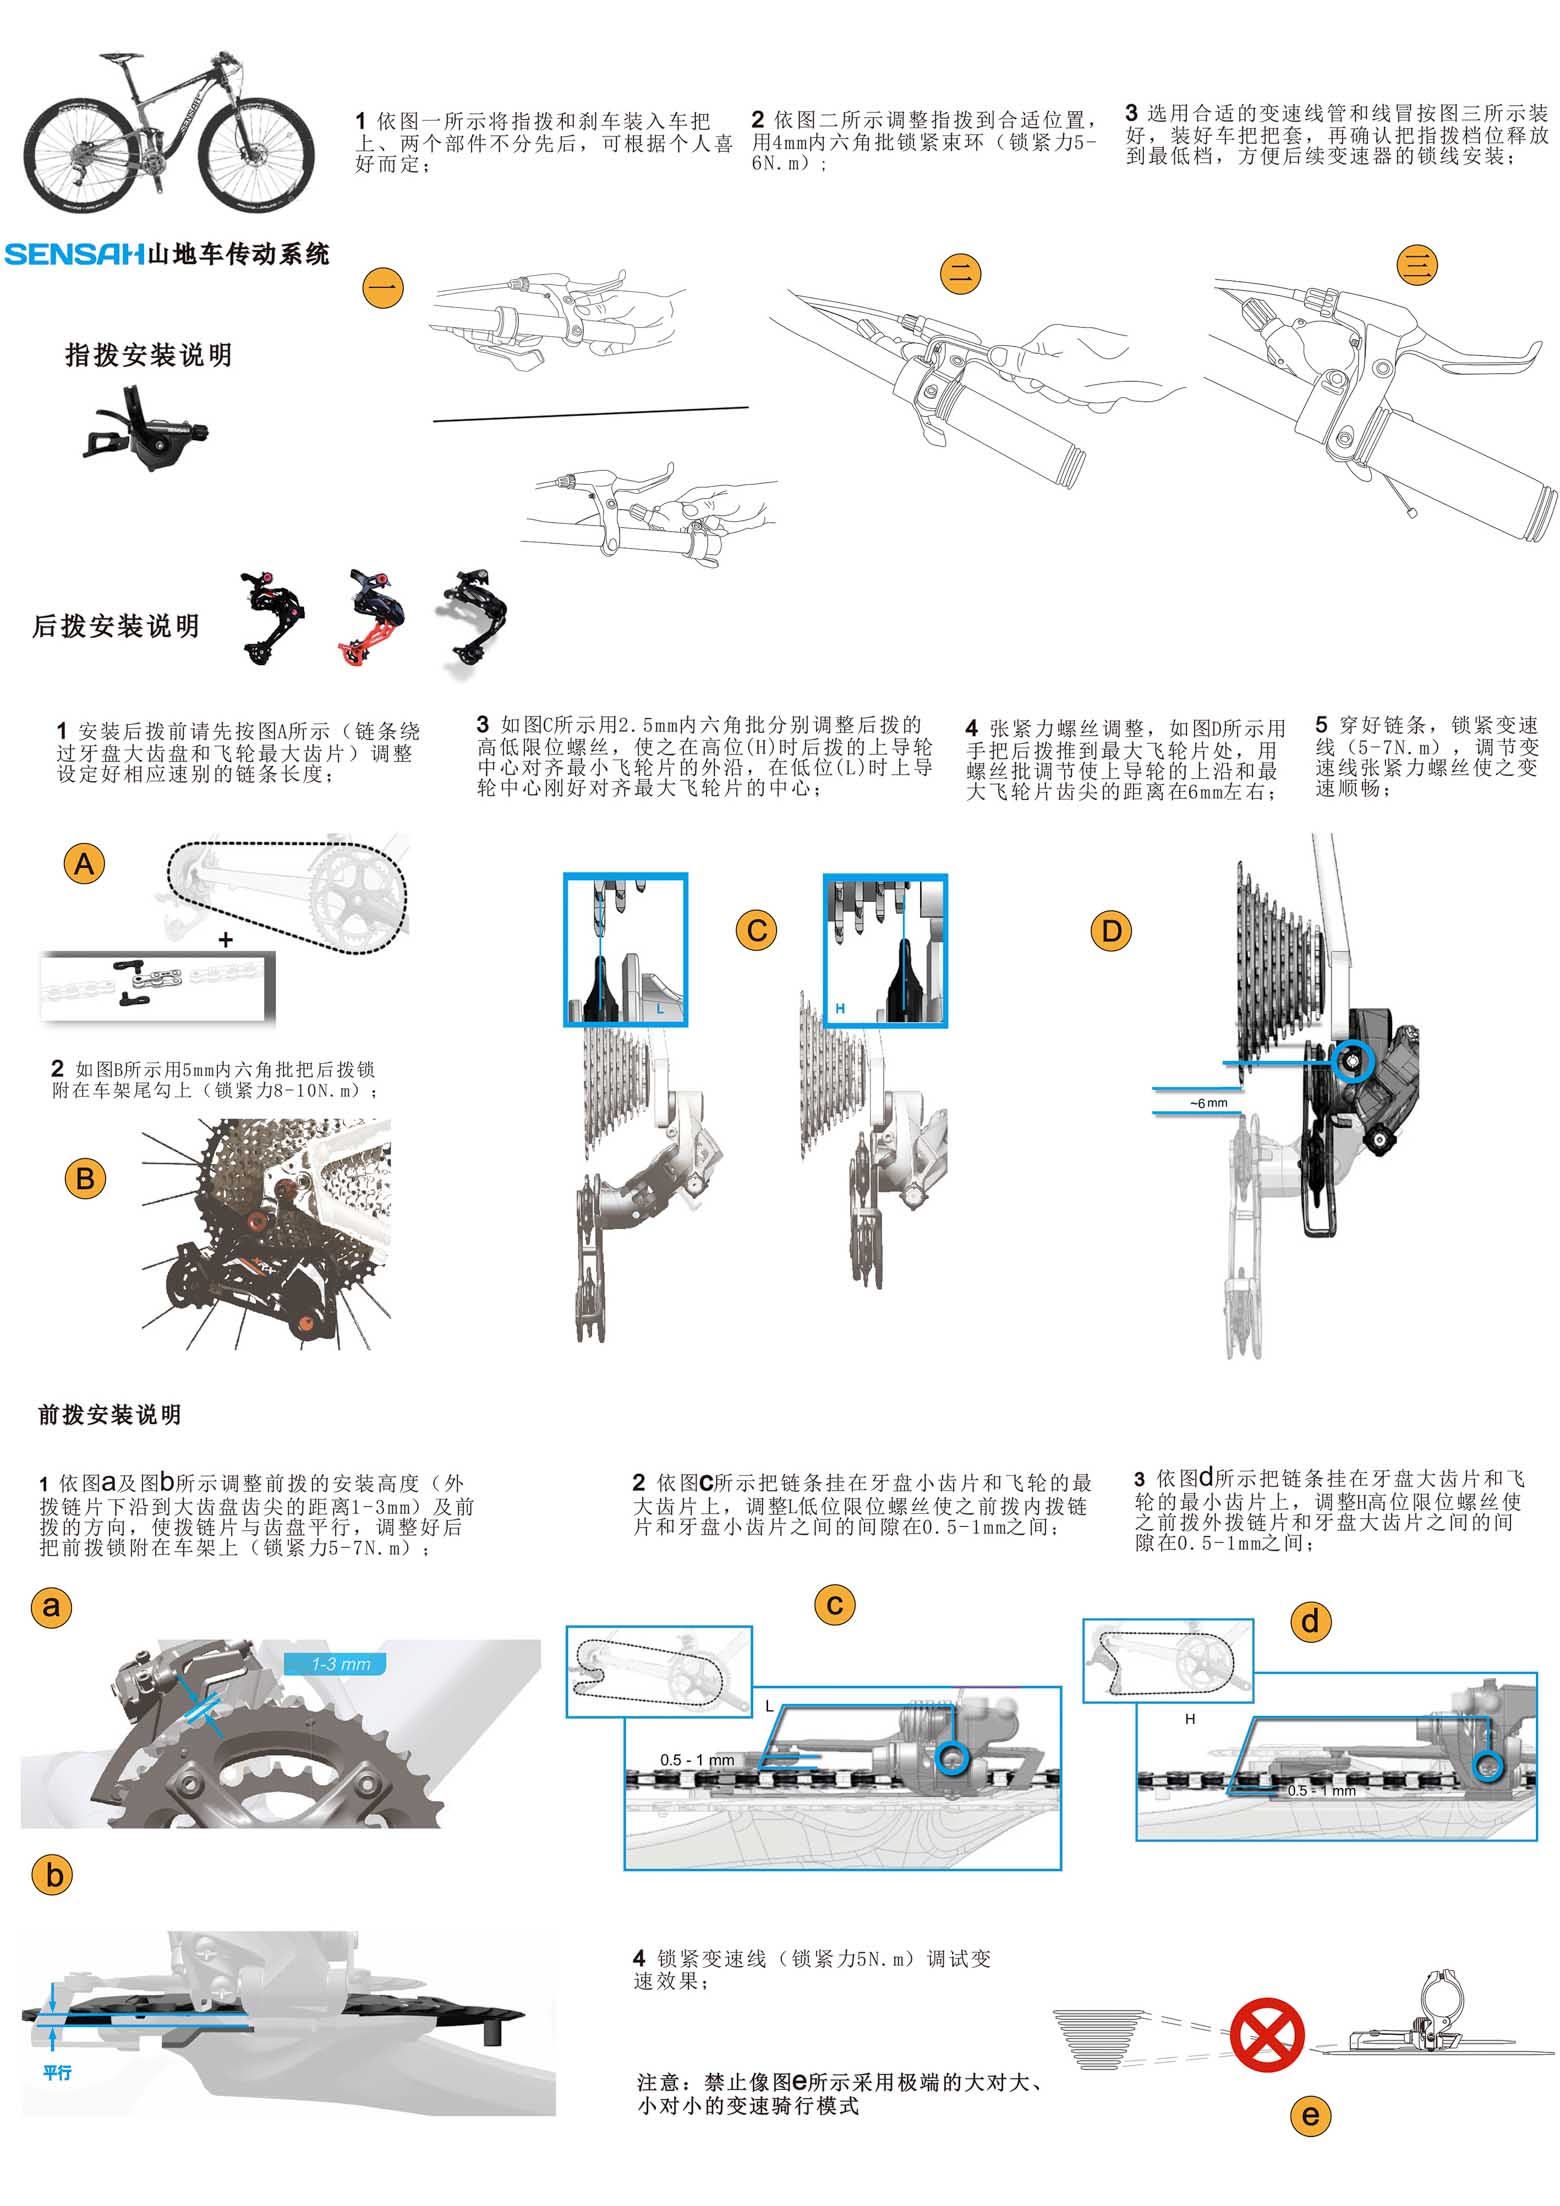 Sensah MTB drive train system - instructions 001 main image